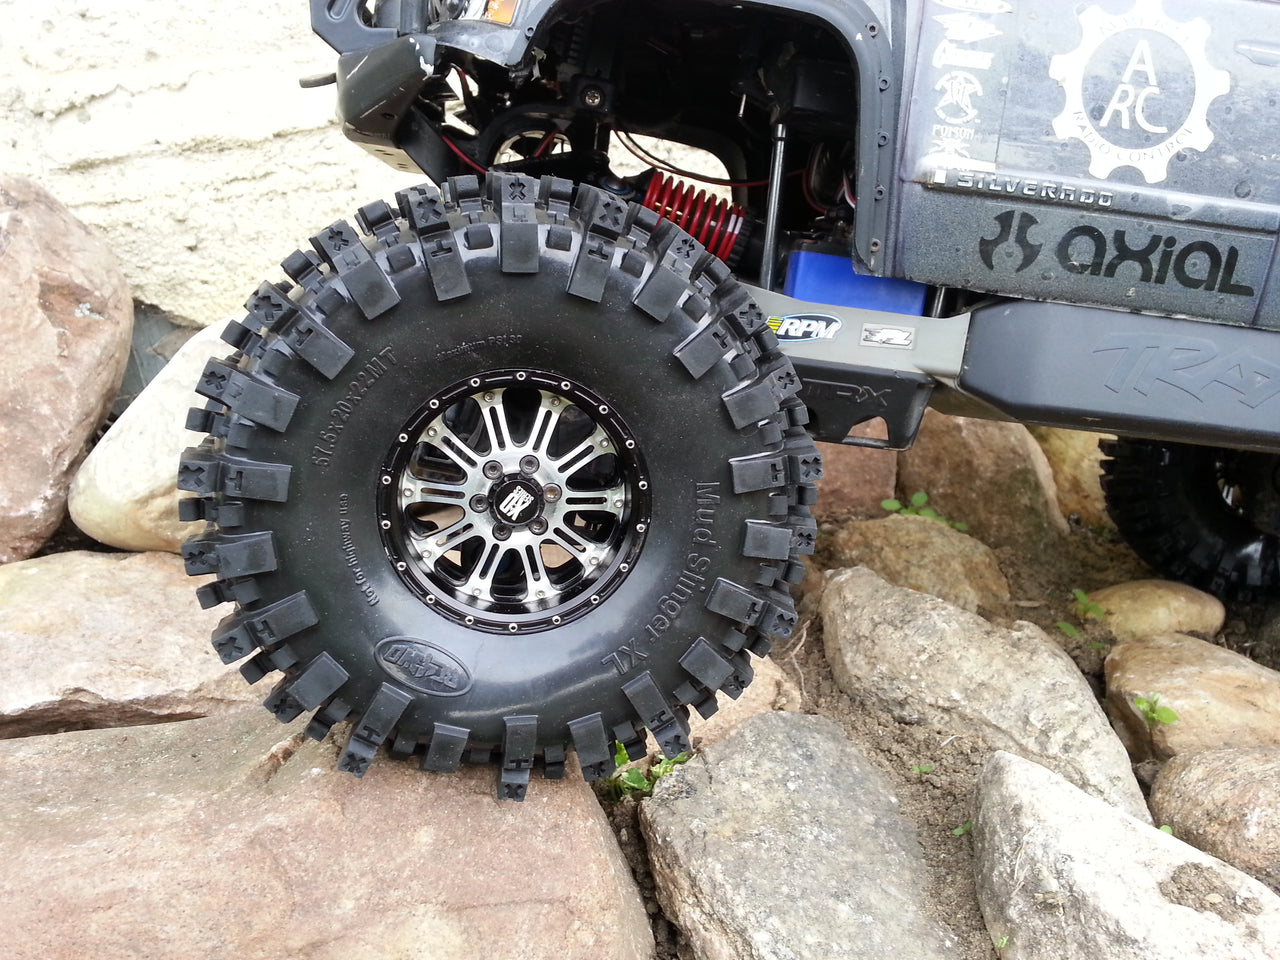 Mud Slinger 2 XL 2.2 Scale Tires RC4ZT0122